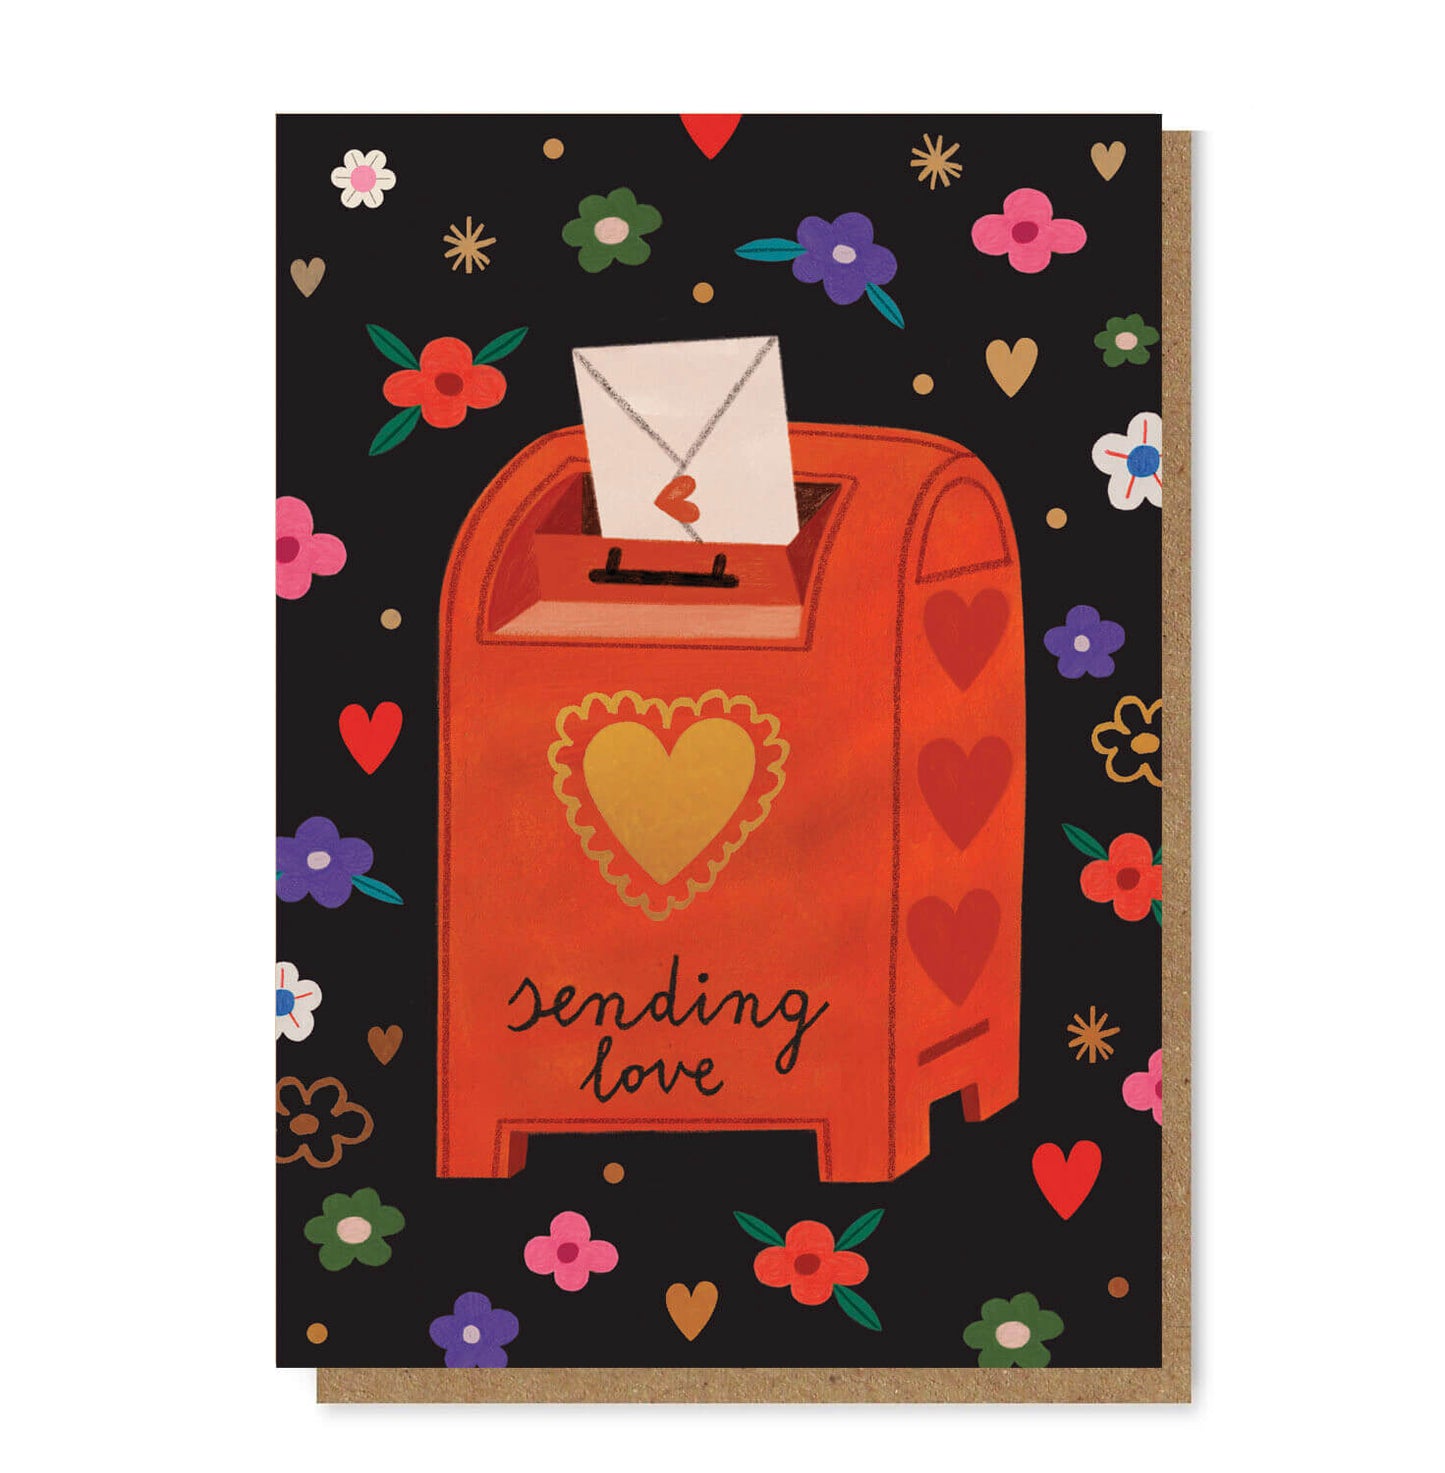 Sending Love - Greeting Cards